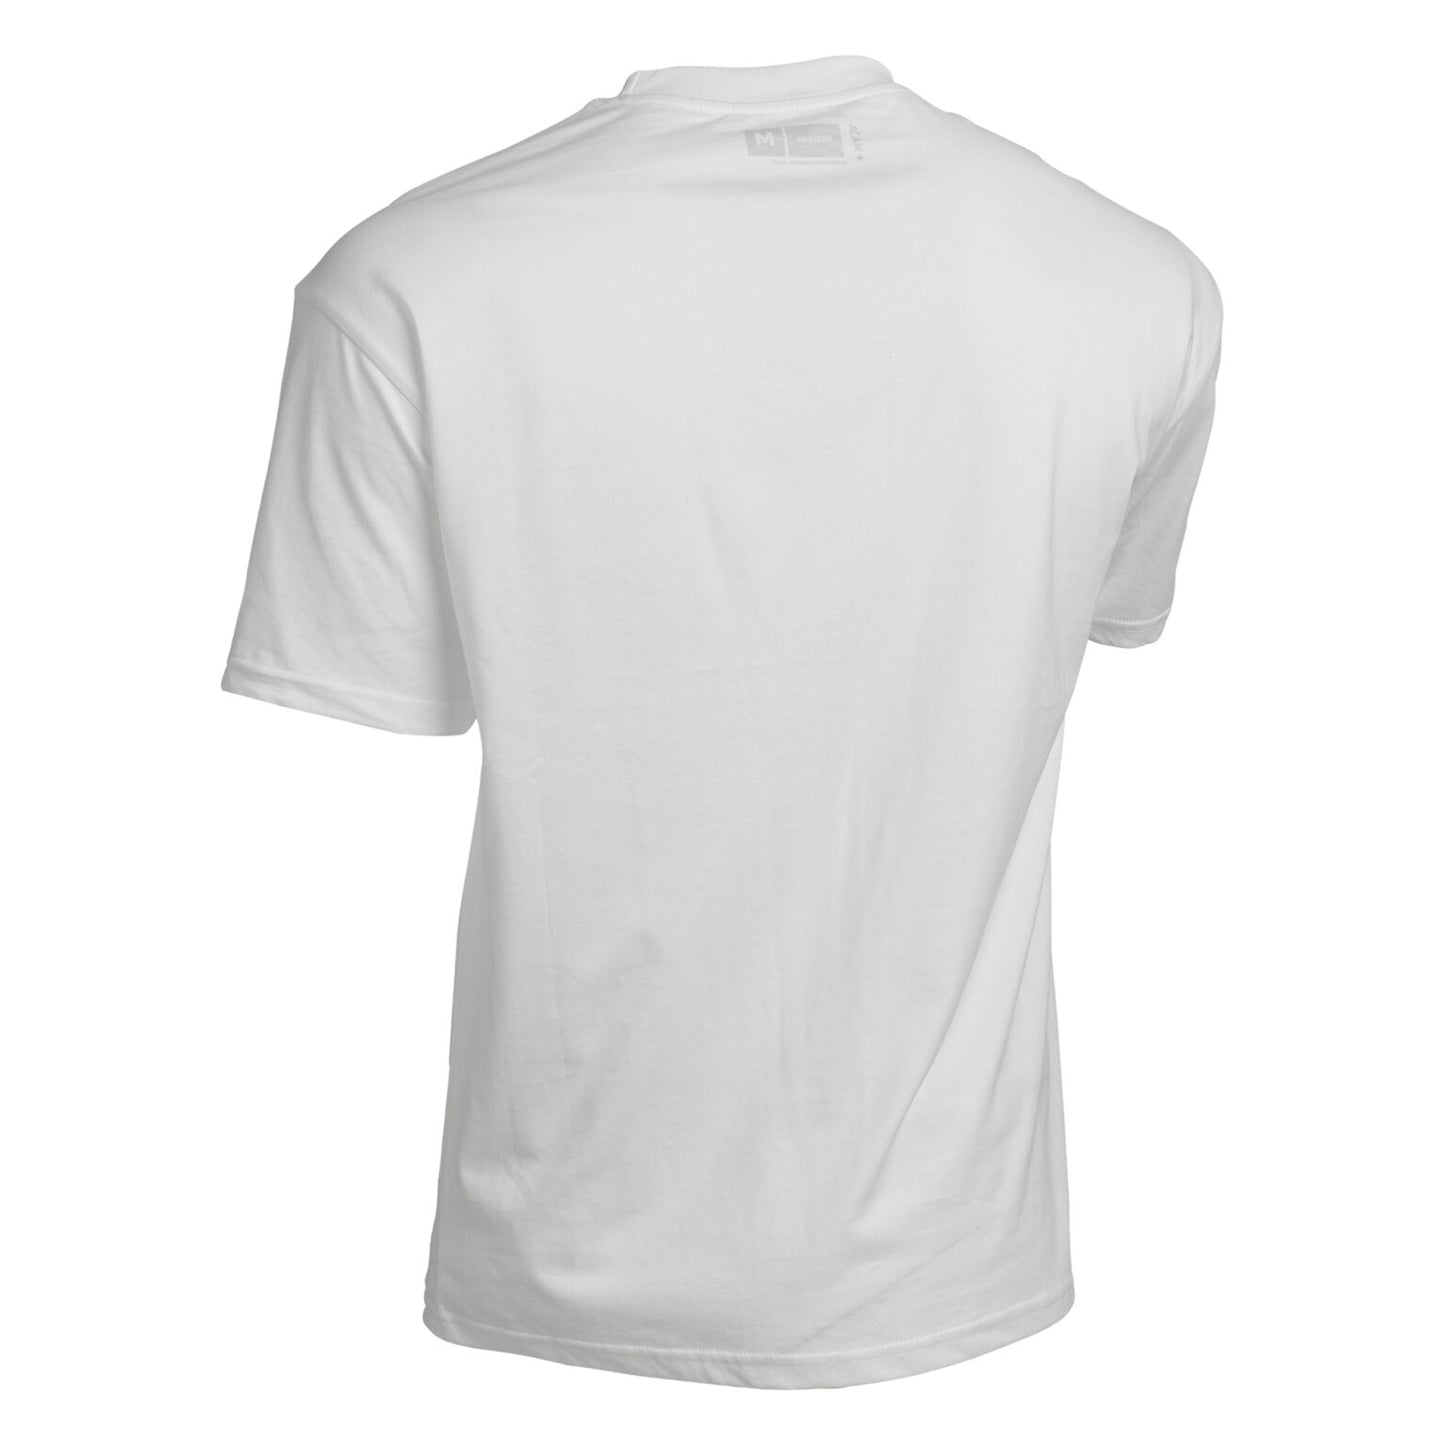 Camiseta Maja Blanca Origen - Manga Corta